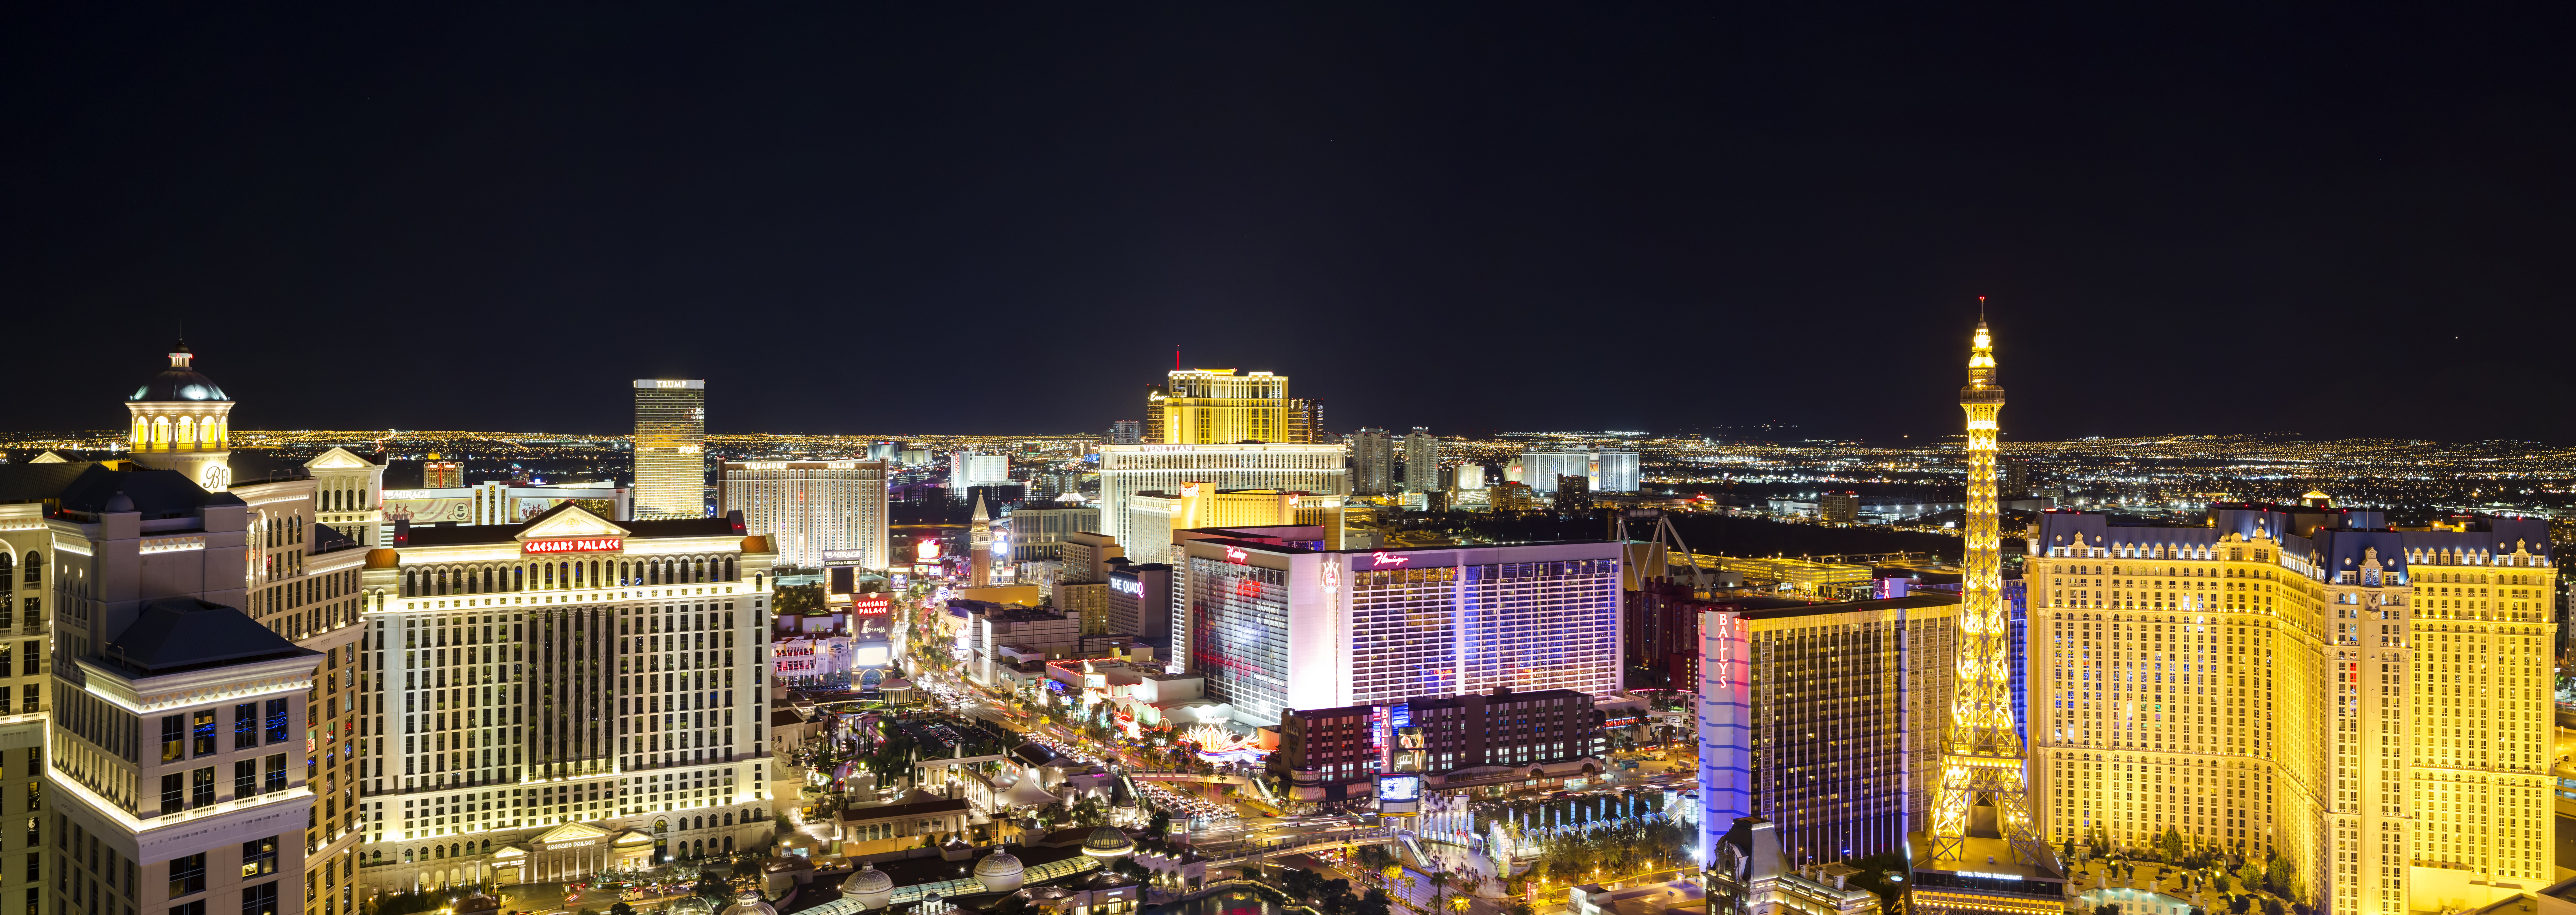 Aerial View of the Las Vegas Strip at Night